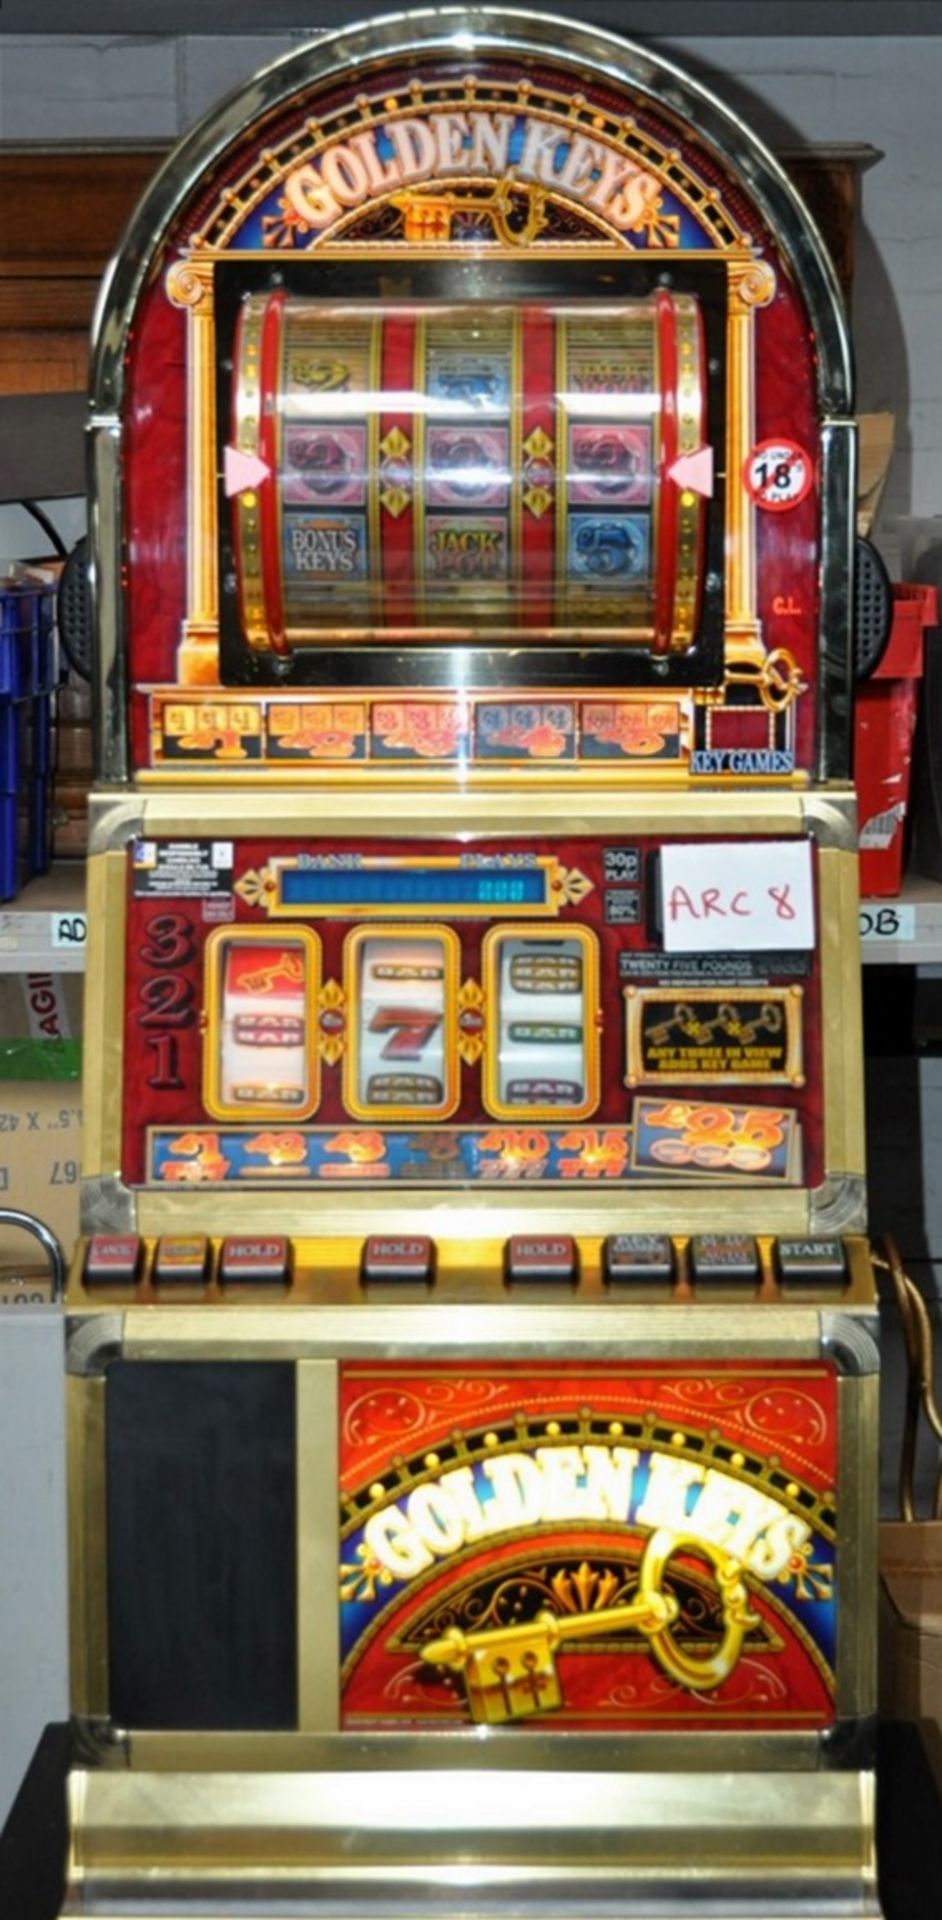 1 x "GOLDEN KEYS" Arcade Fruit Machine - Manufacturer: Barcrest - Pre-Owned In Good Working - Image 3 of 3